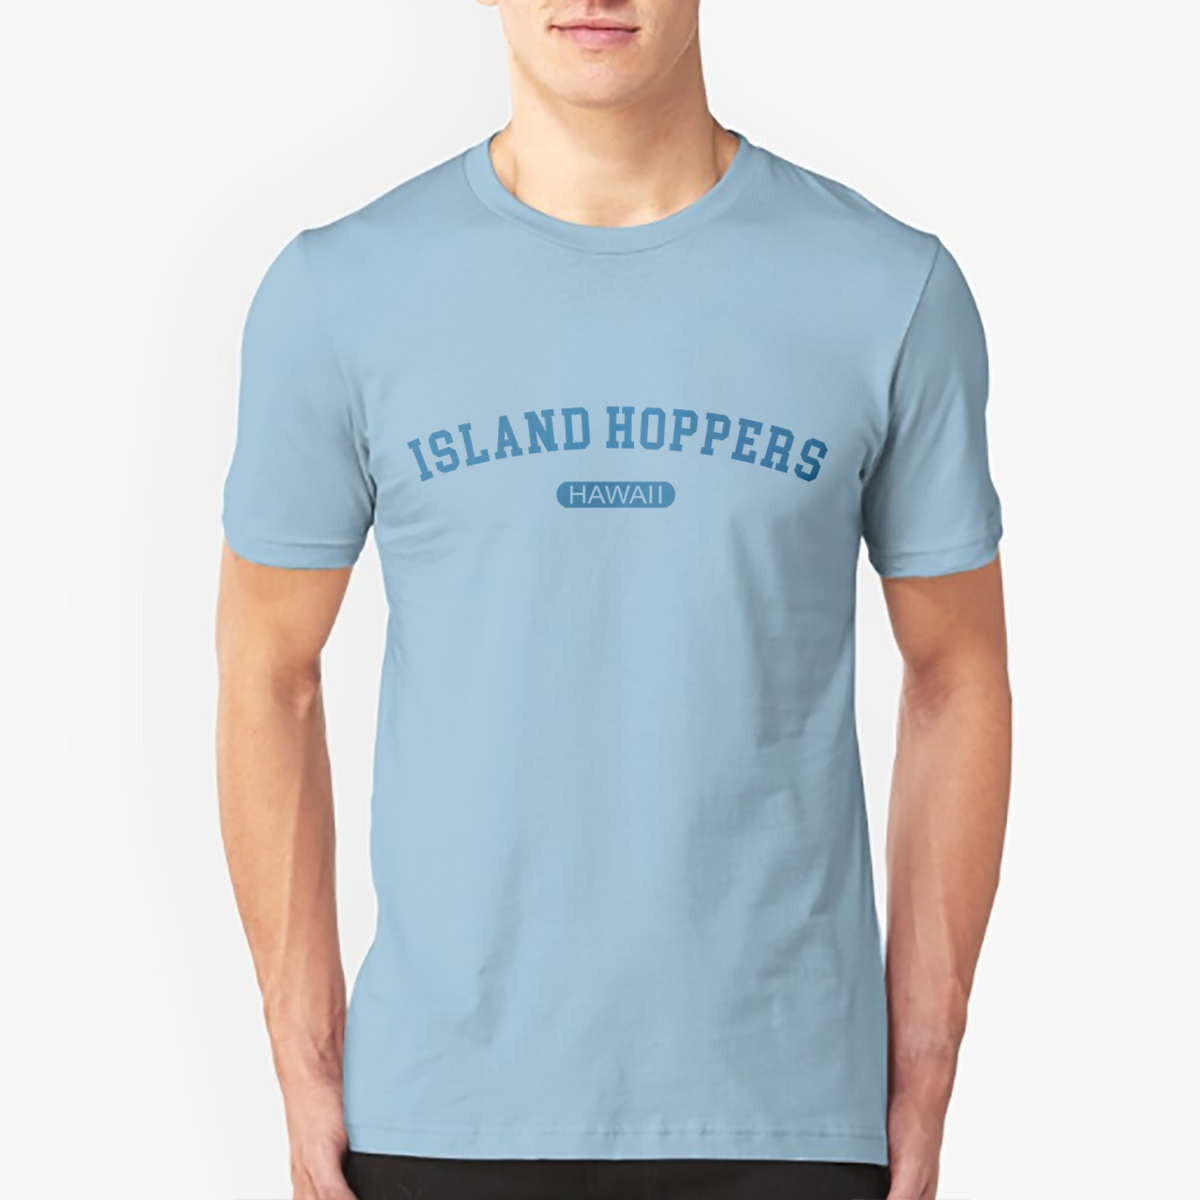 ISLAND HOPPERS HAWAII T-Shirt